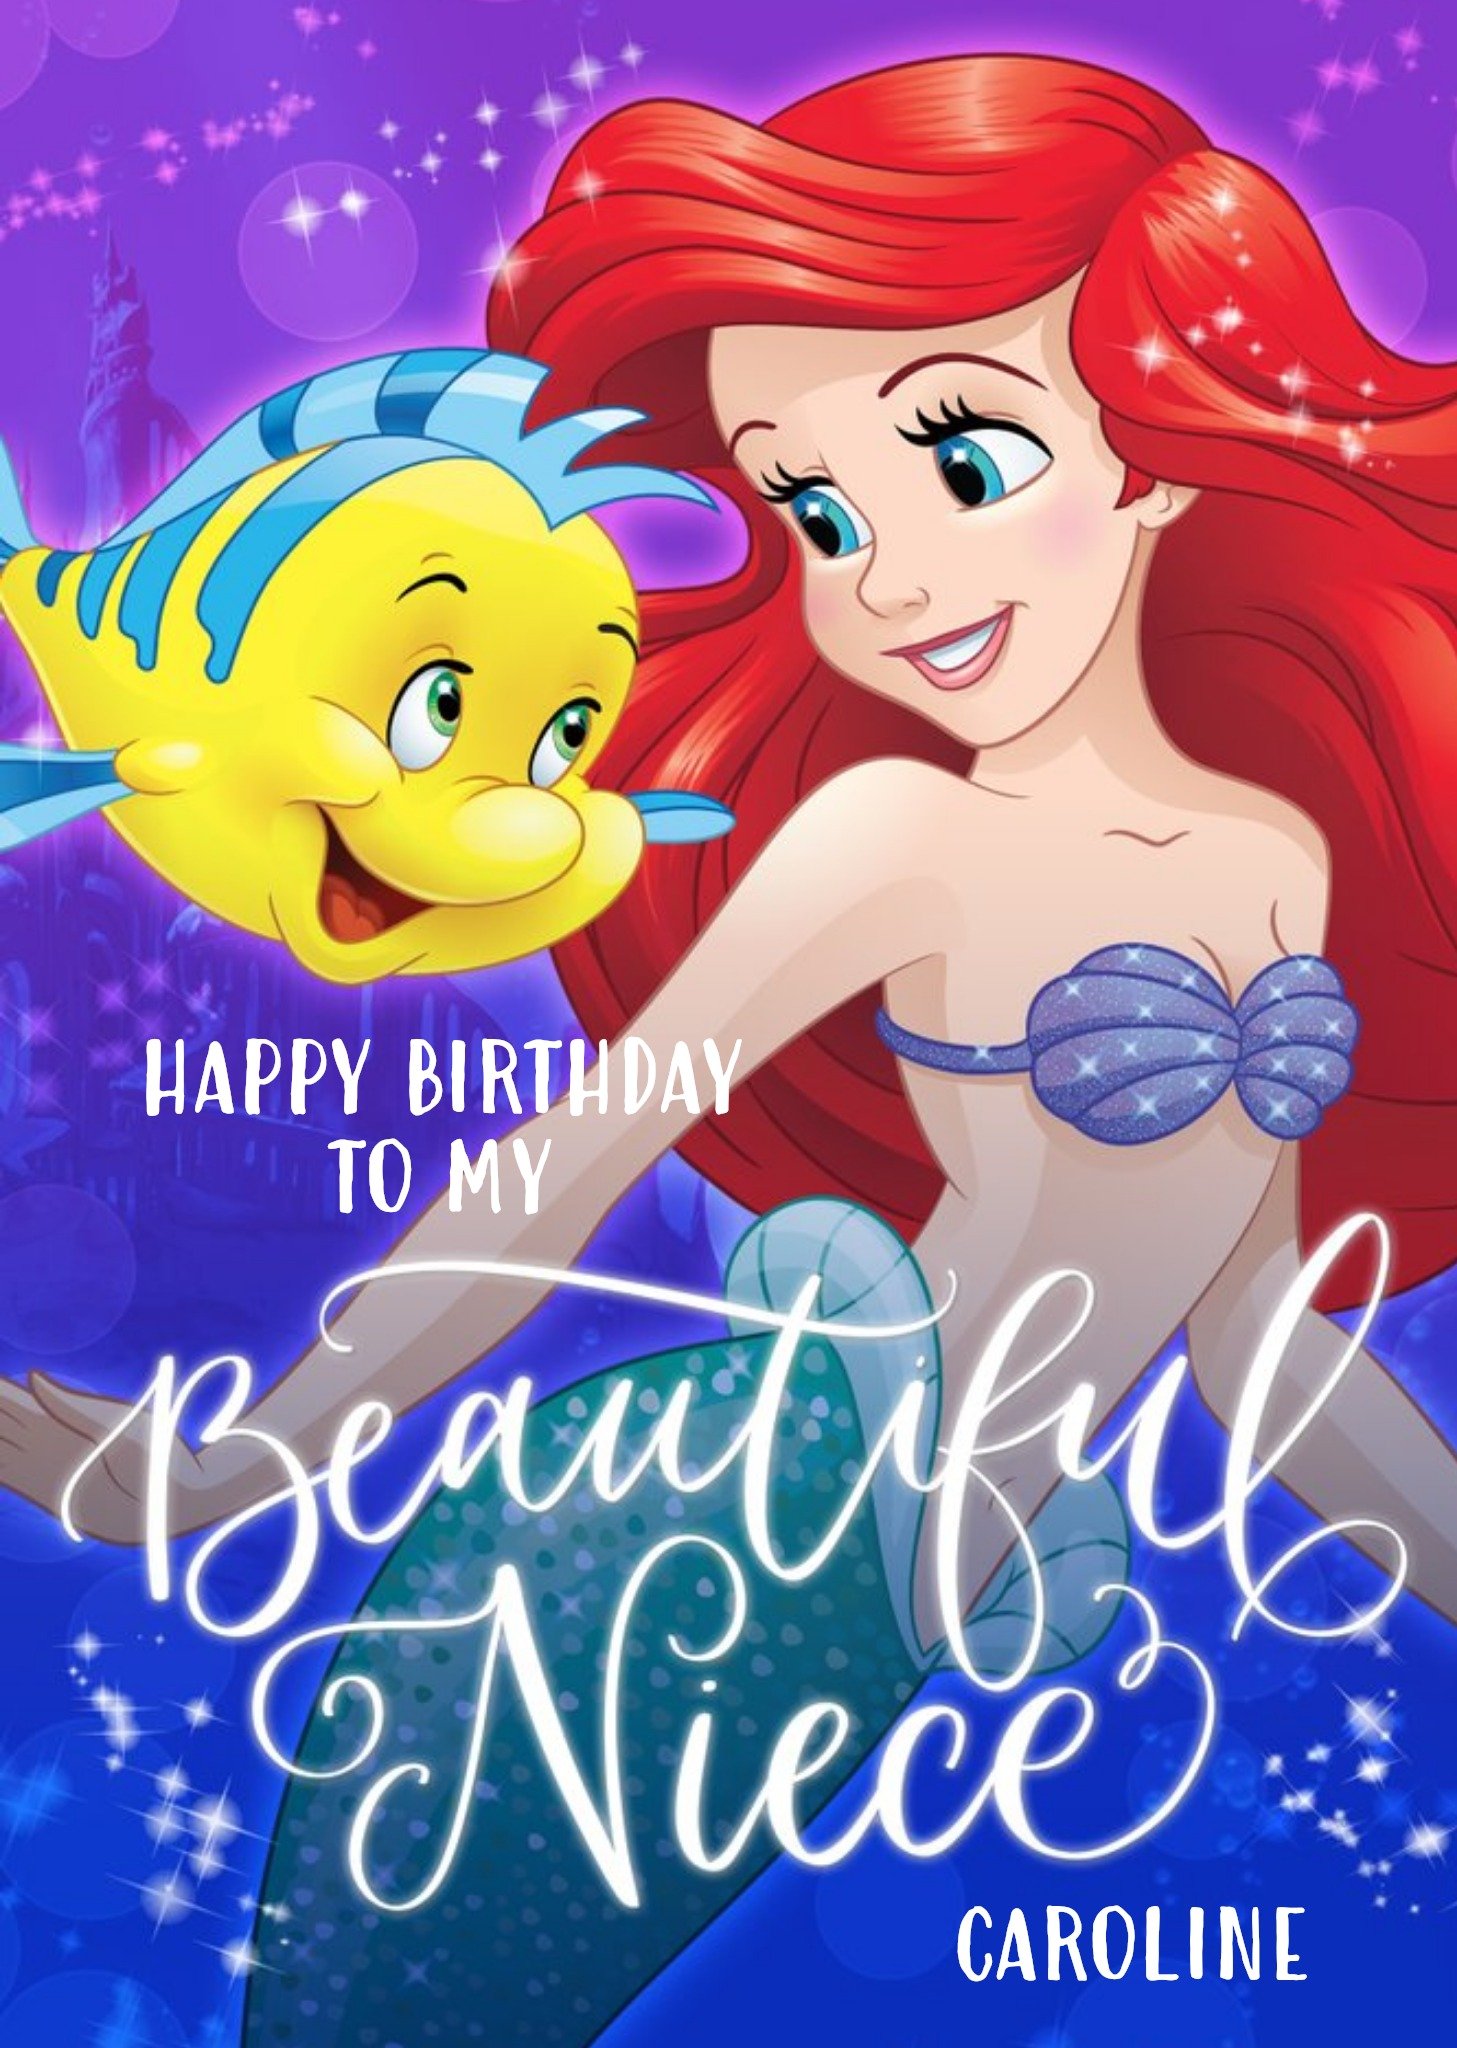 Disney Princess Ariel Birthday Card Ecard